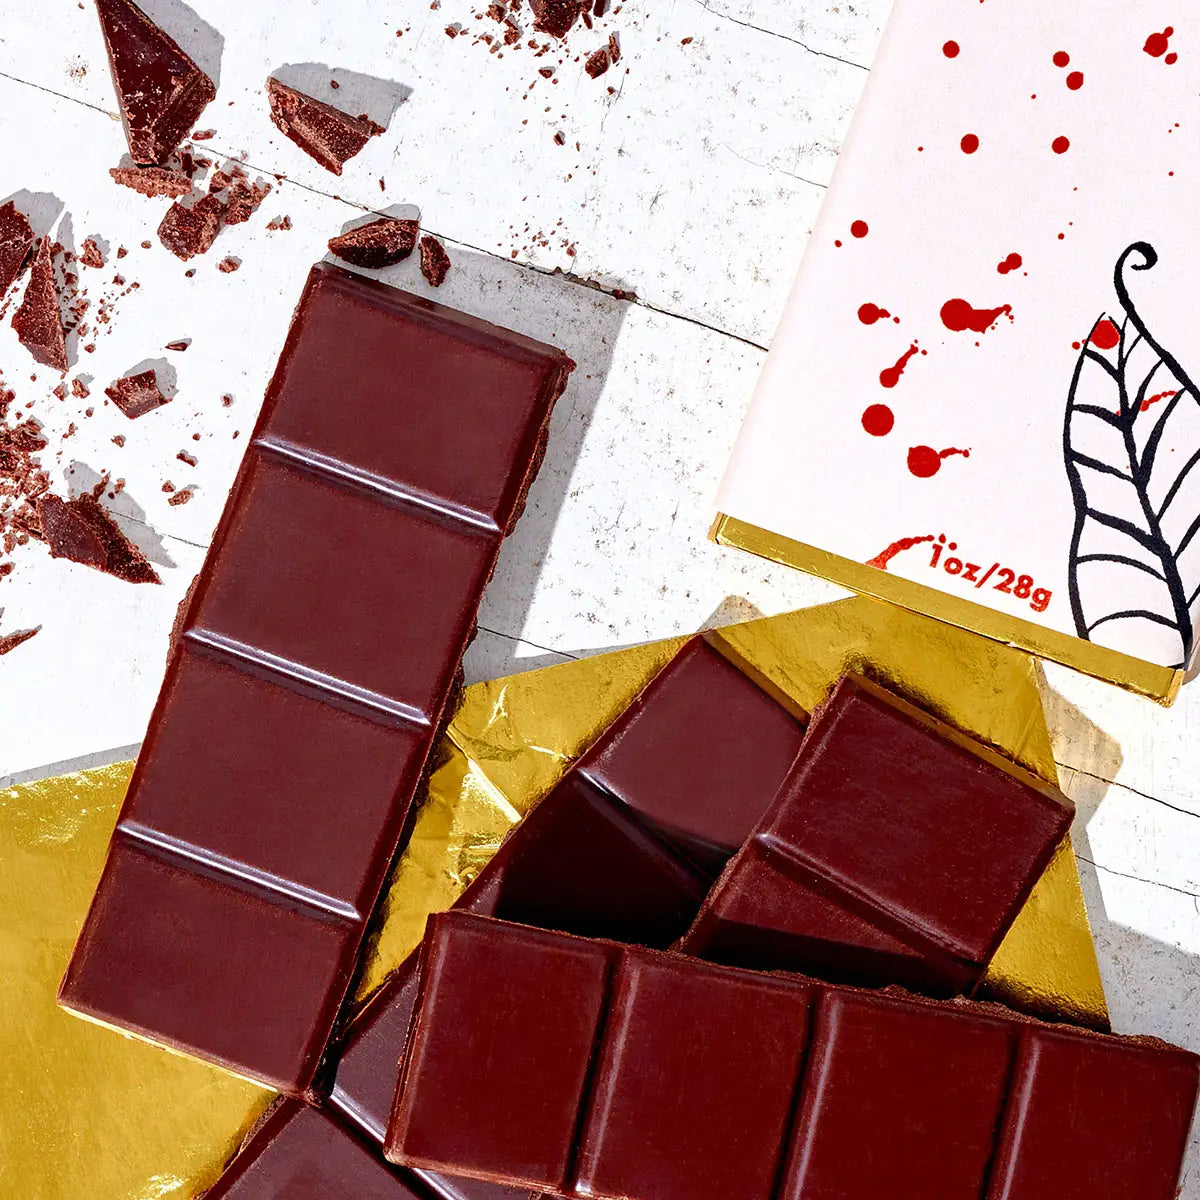 FINE & RAW Raspberry Chocolate Bar (67% cacao)